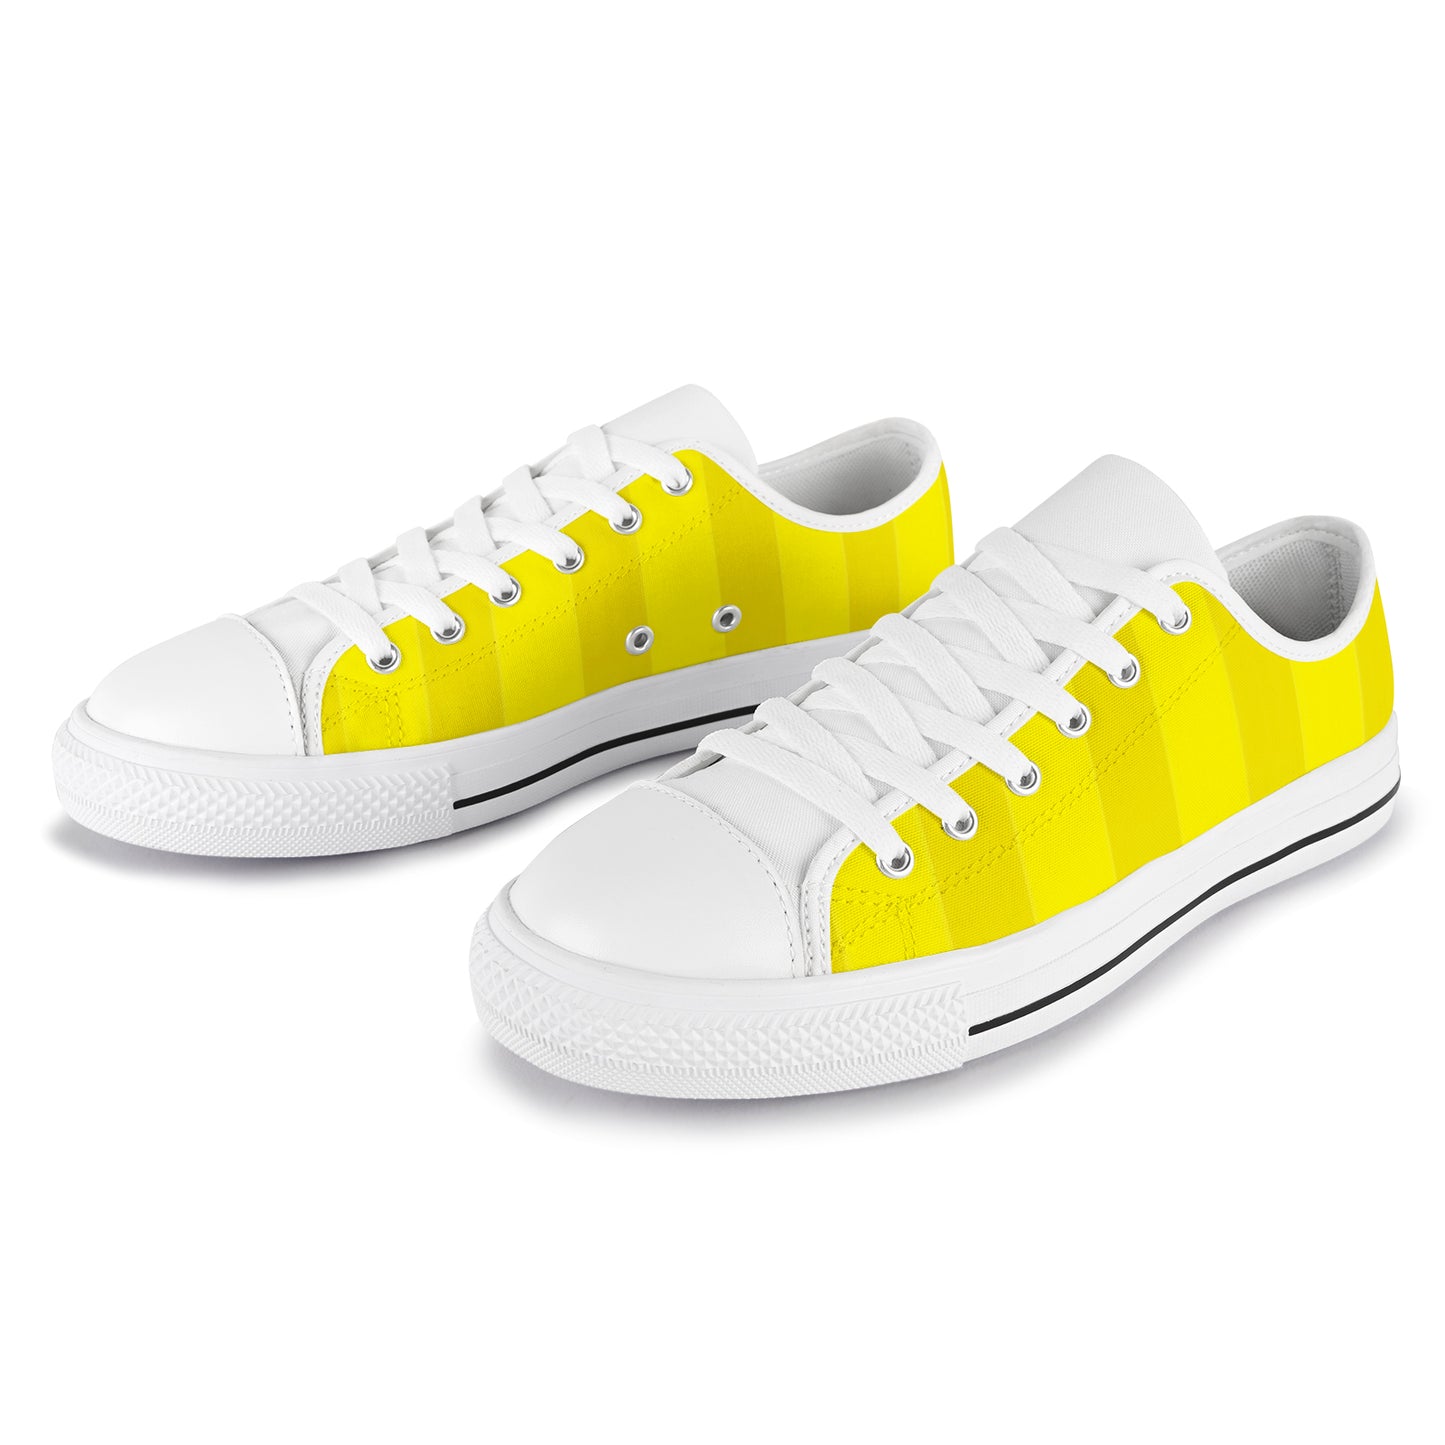 Women's Sneakers - Yellow Stripes